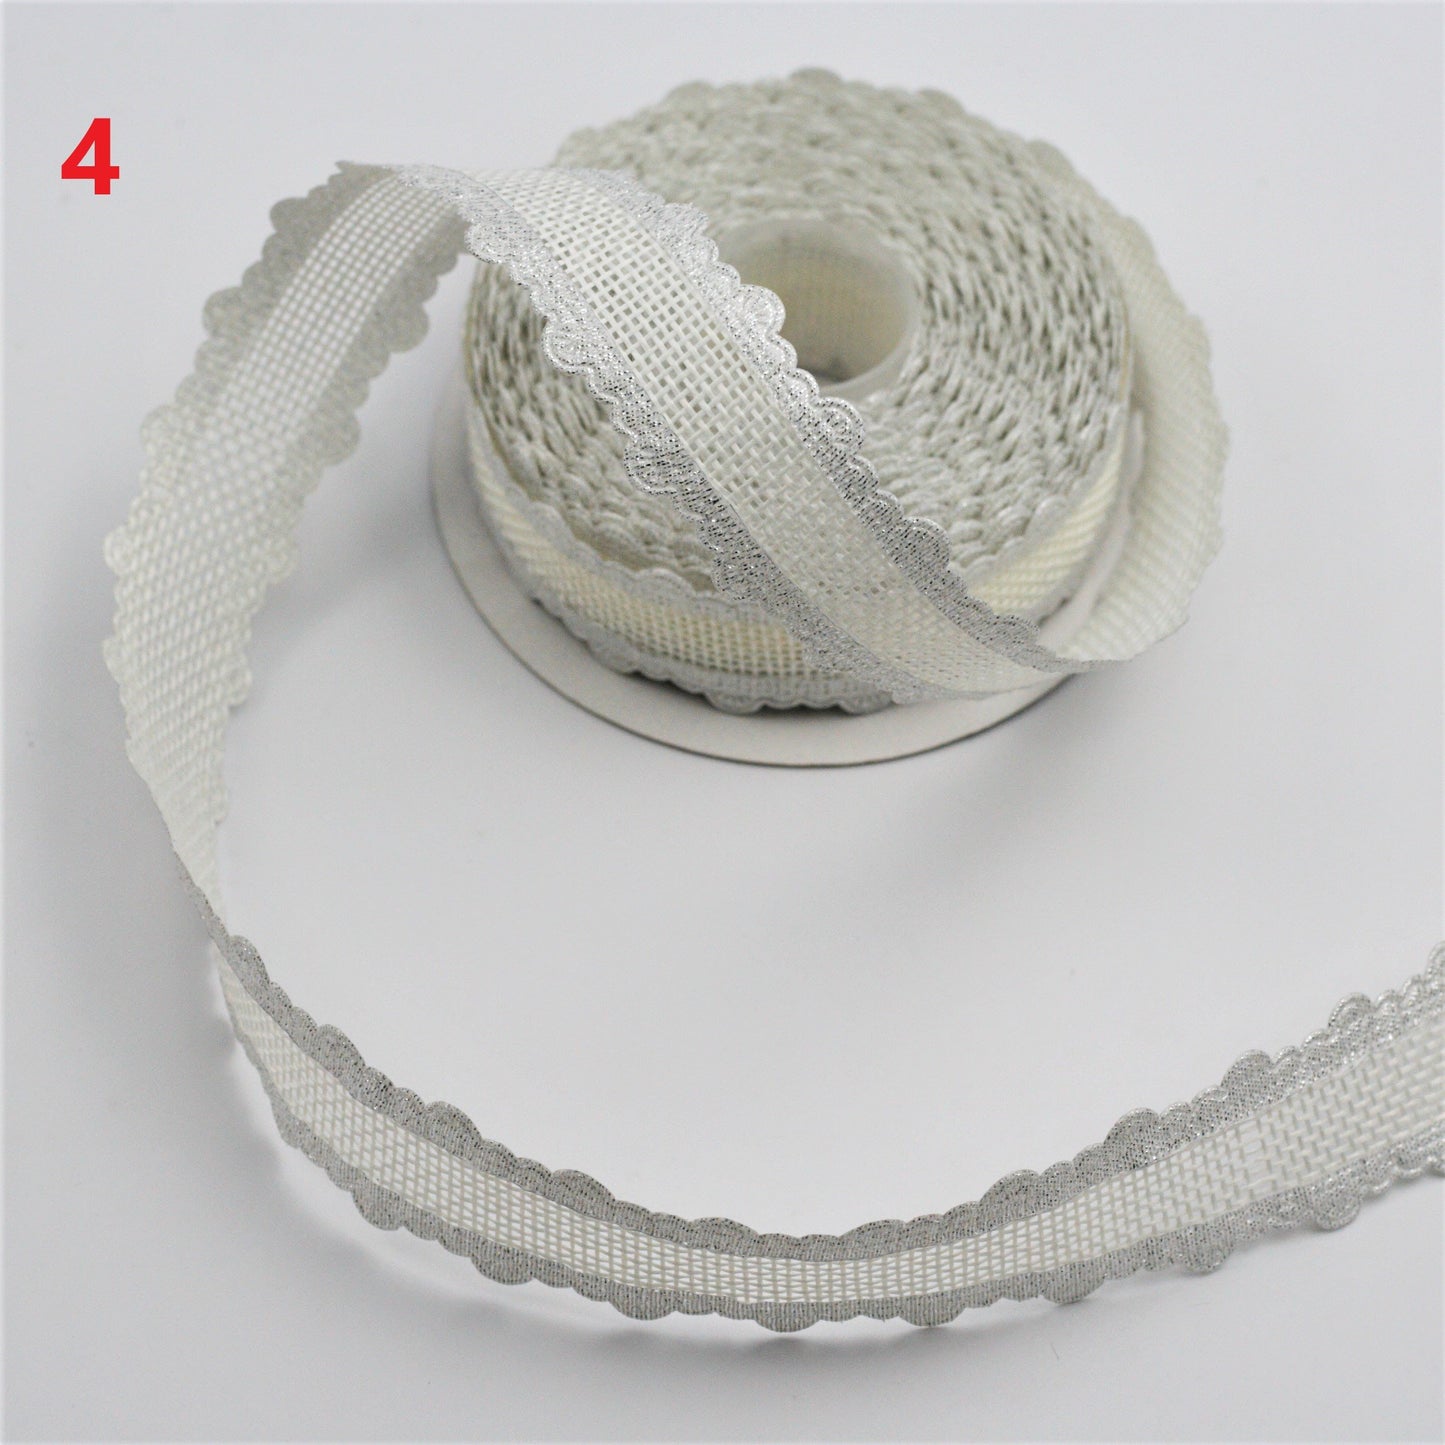 2cm Width Glittery Edged Jute Ribbon Ribbon Packaging, Ornament, Ribbon Ribbon. (in 9 meters ball)